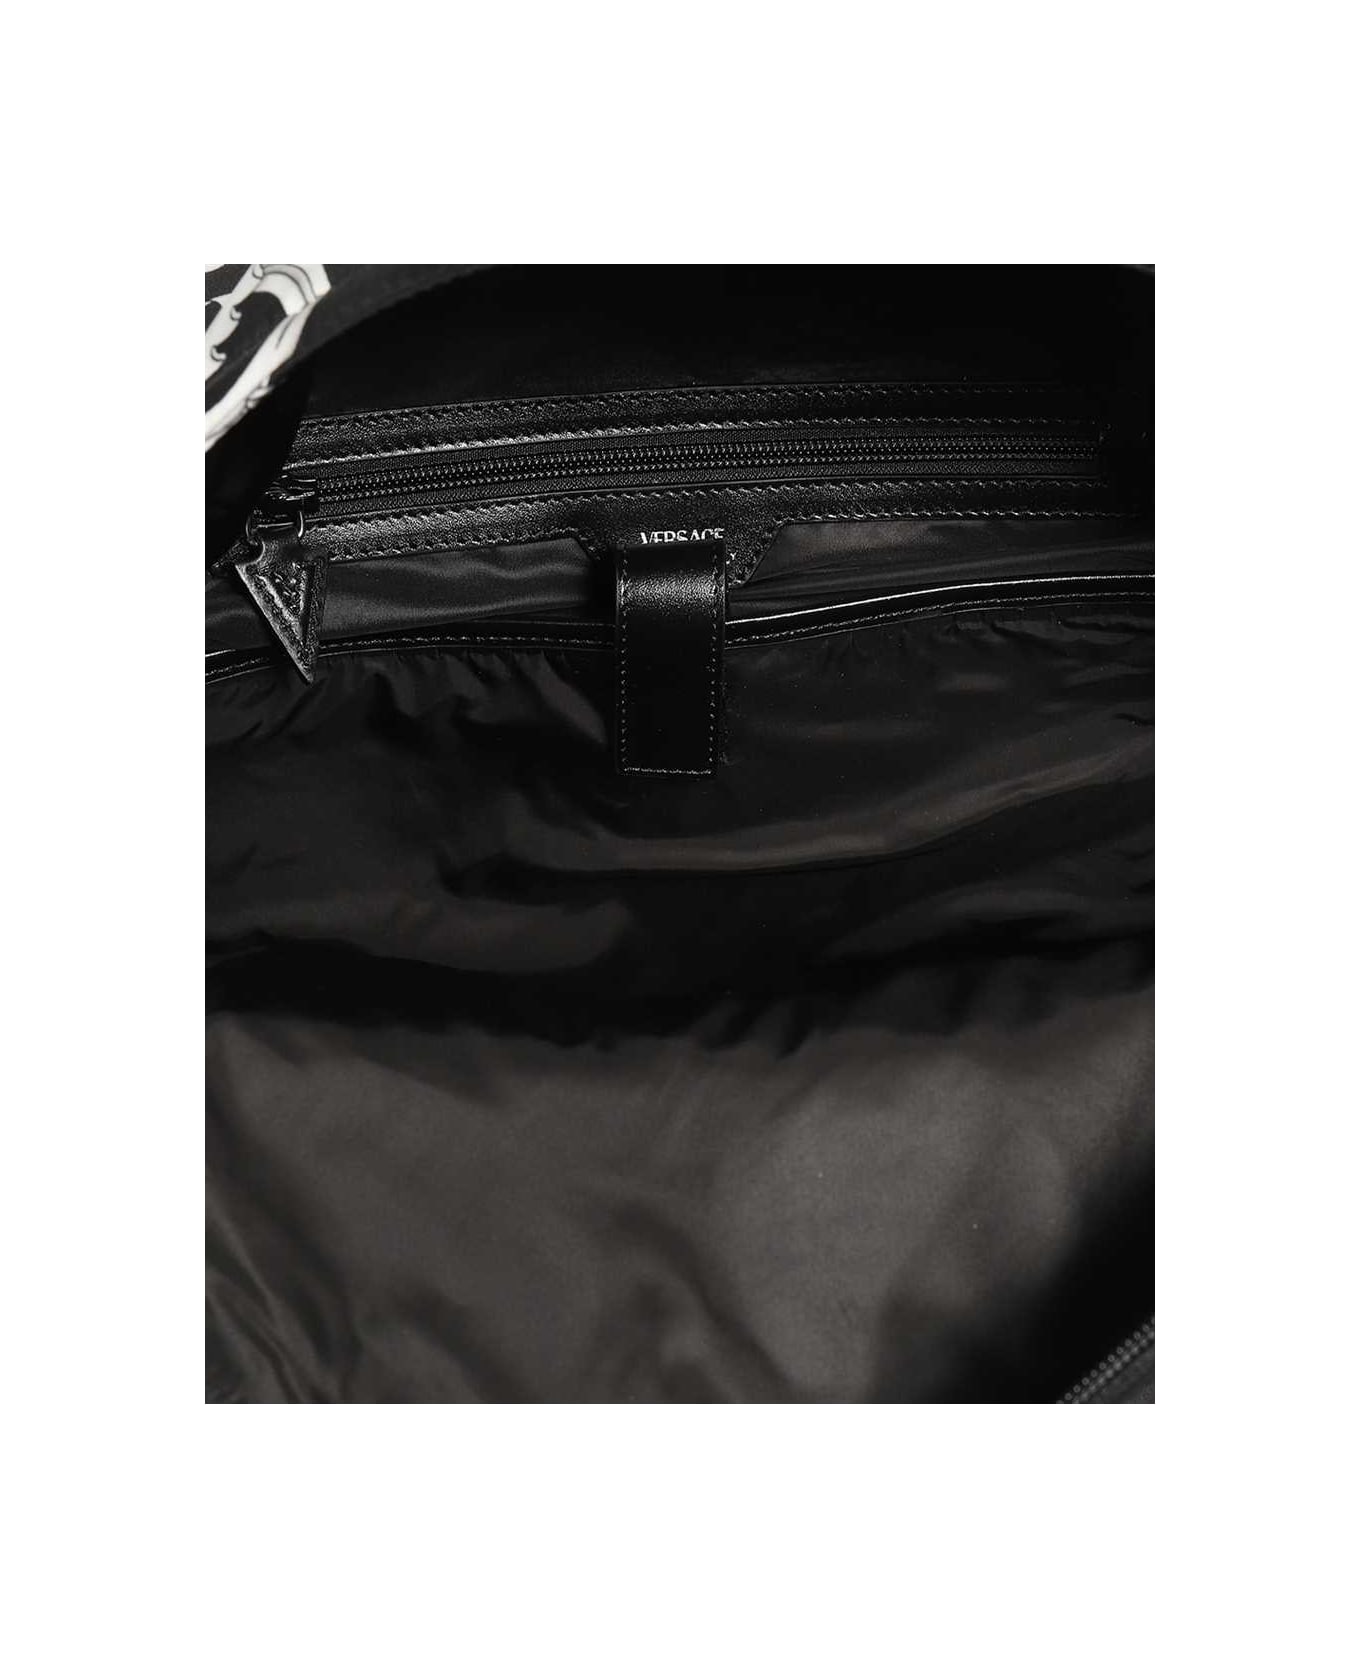 Versace Printed Backpack - black バックパック